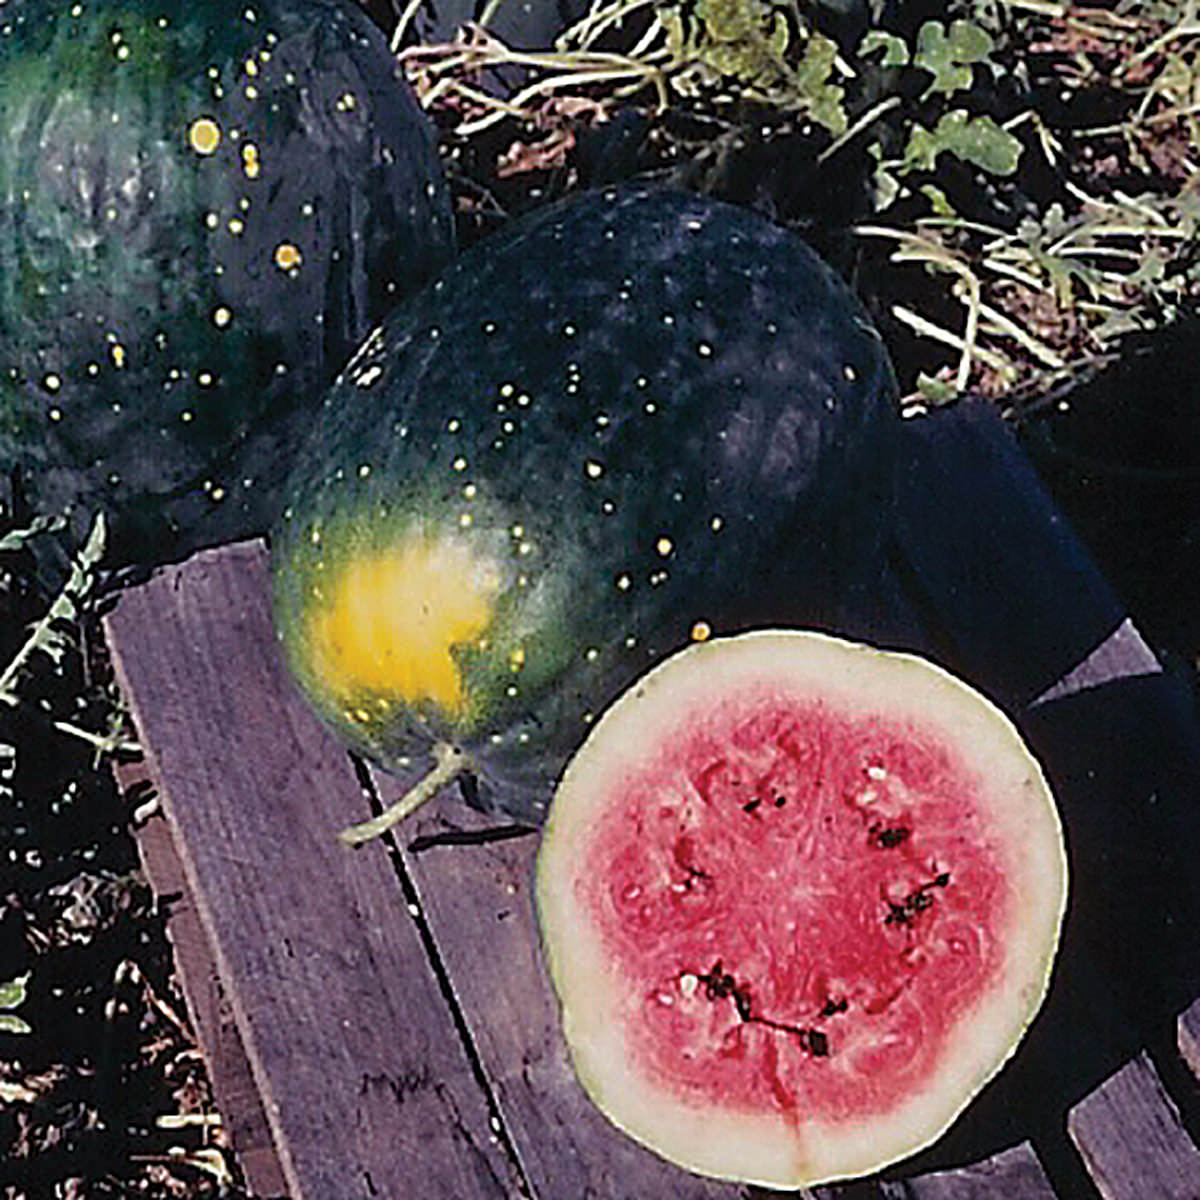 Moon & Stars Red Watermelon Seeds